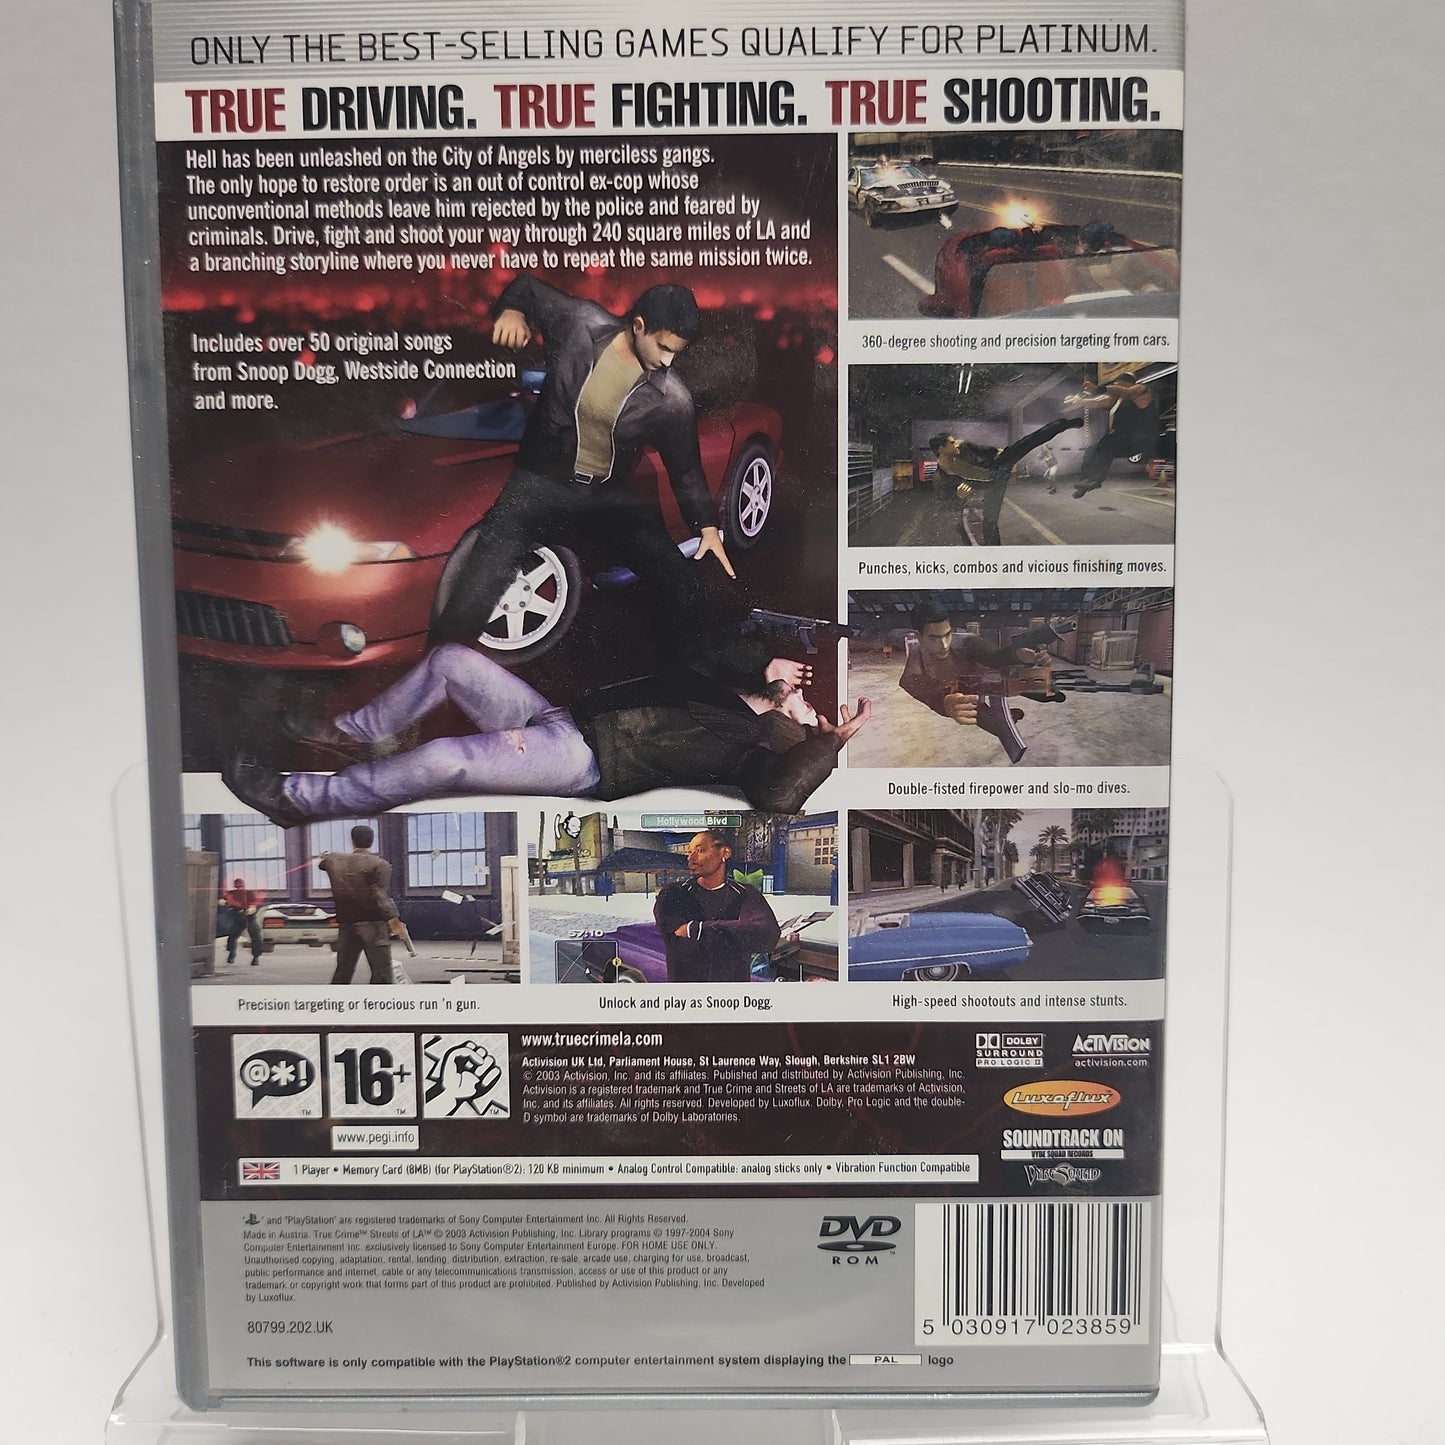 True Crime Streets of LA Platinum Edition Playstation 2